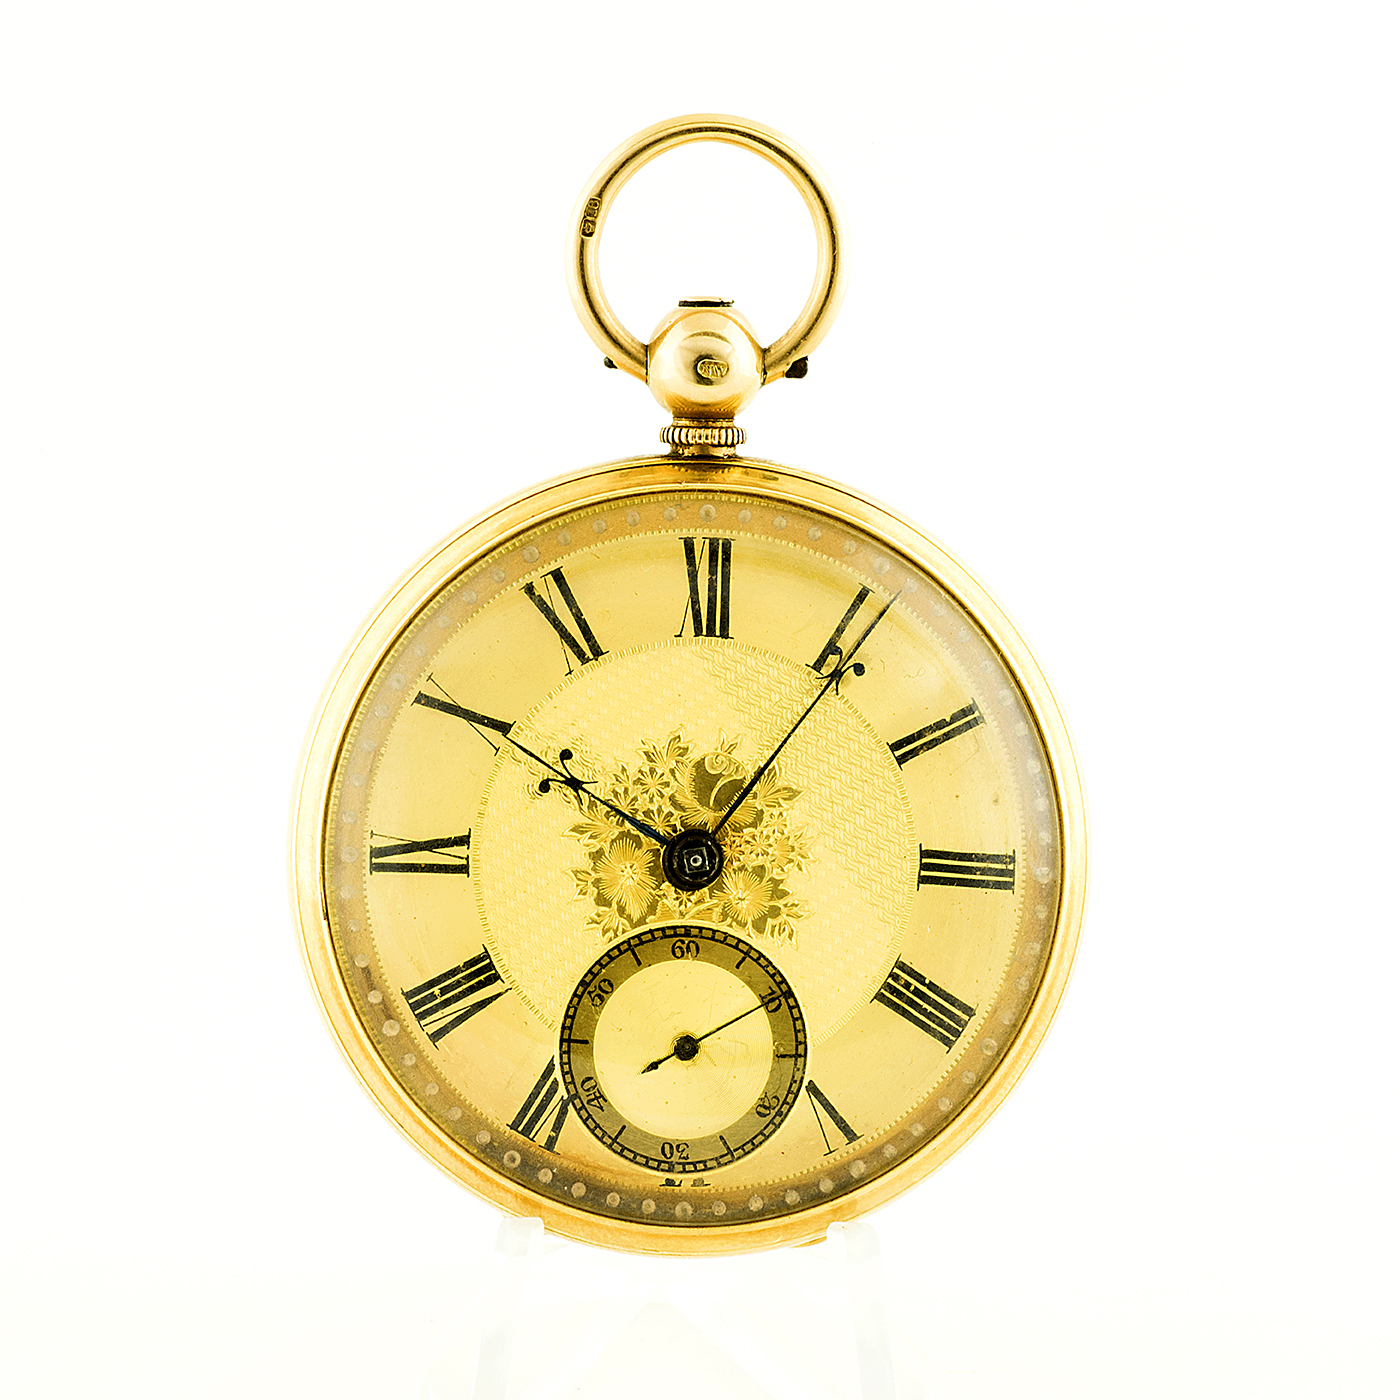 Williams Owen Coventry (England) - reloj de bolsillo - lepine. año, 1878. Oro 18k.